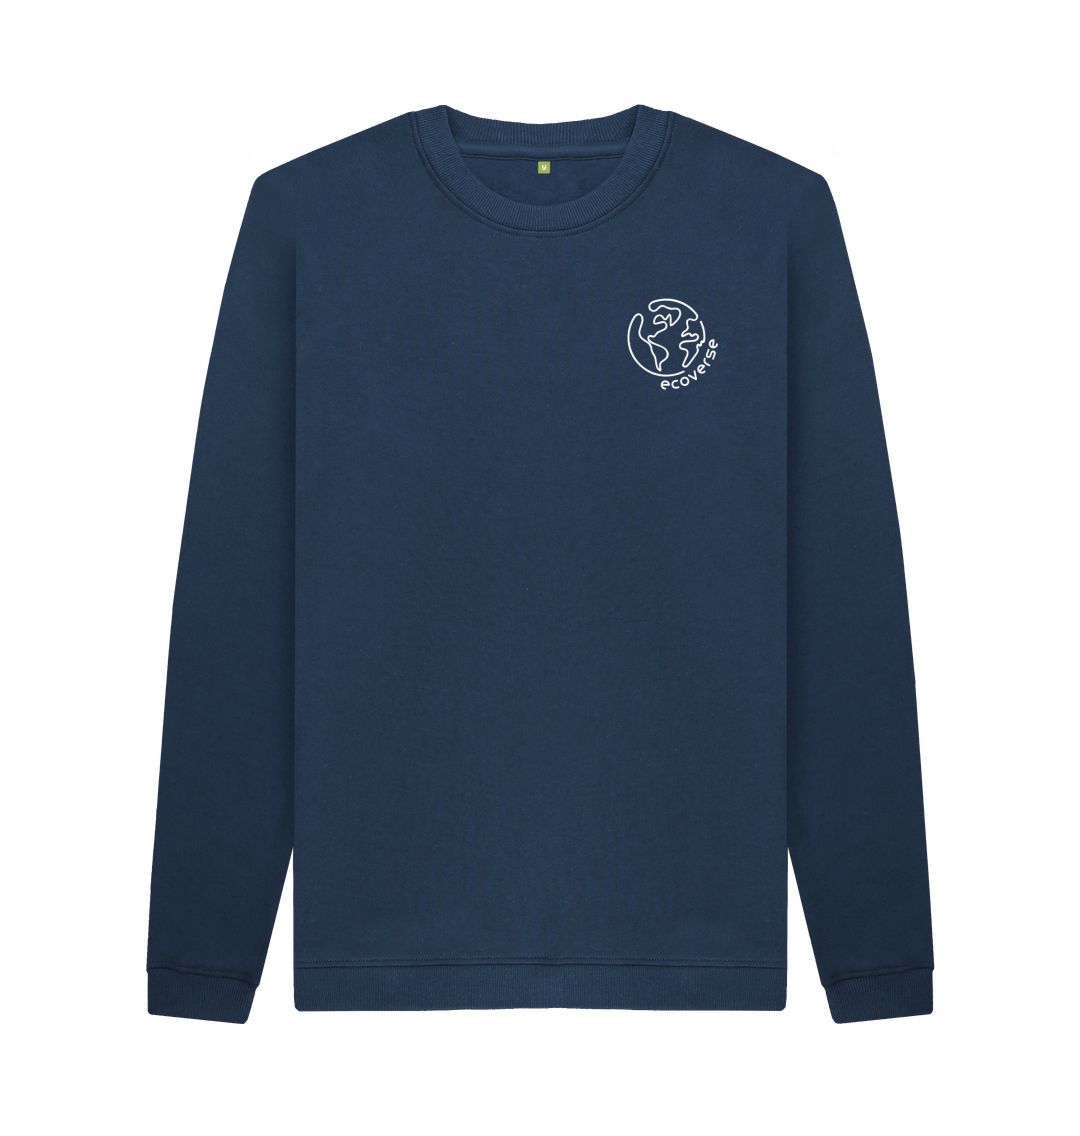 Navy Blue Men's Signature Sweater Dark